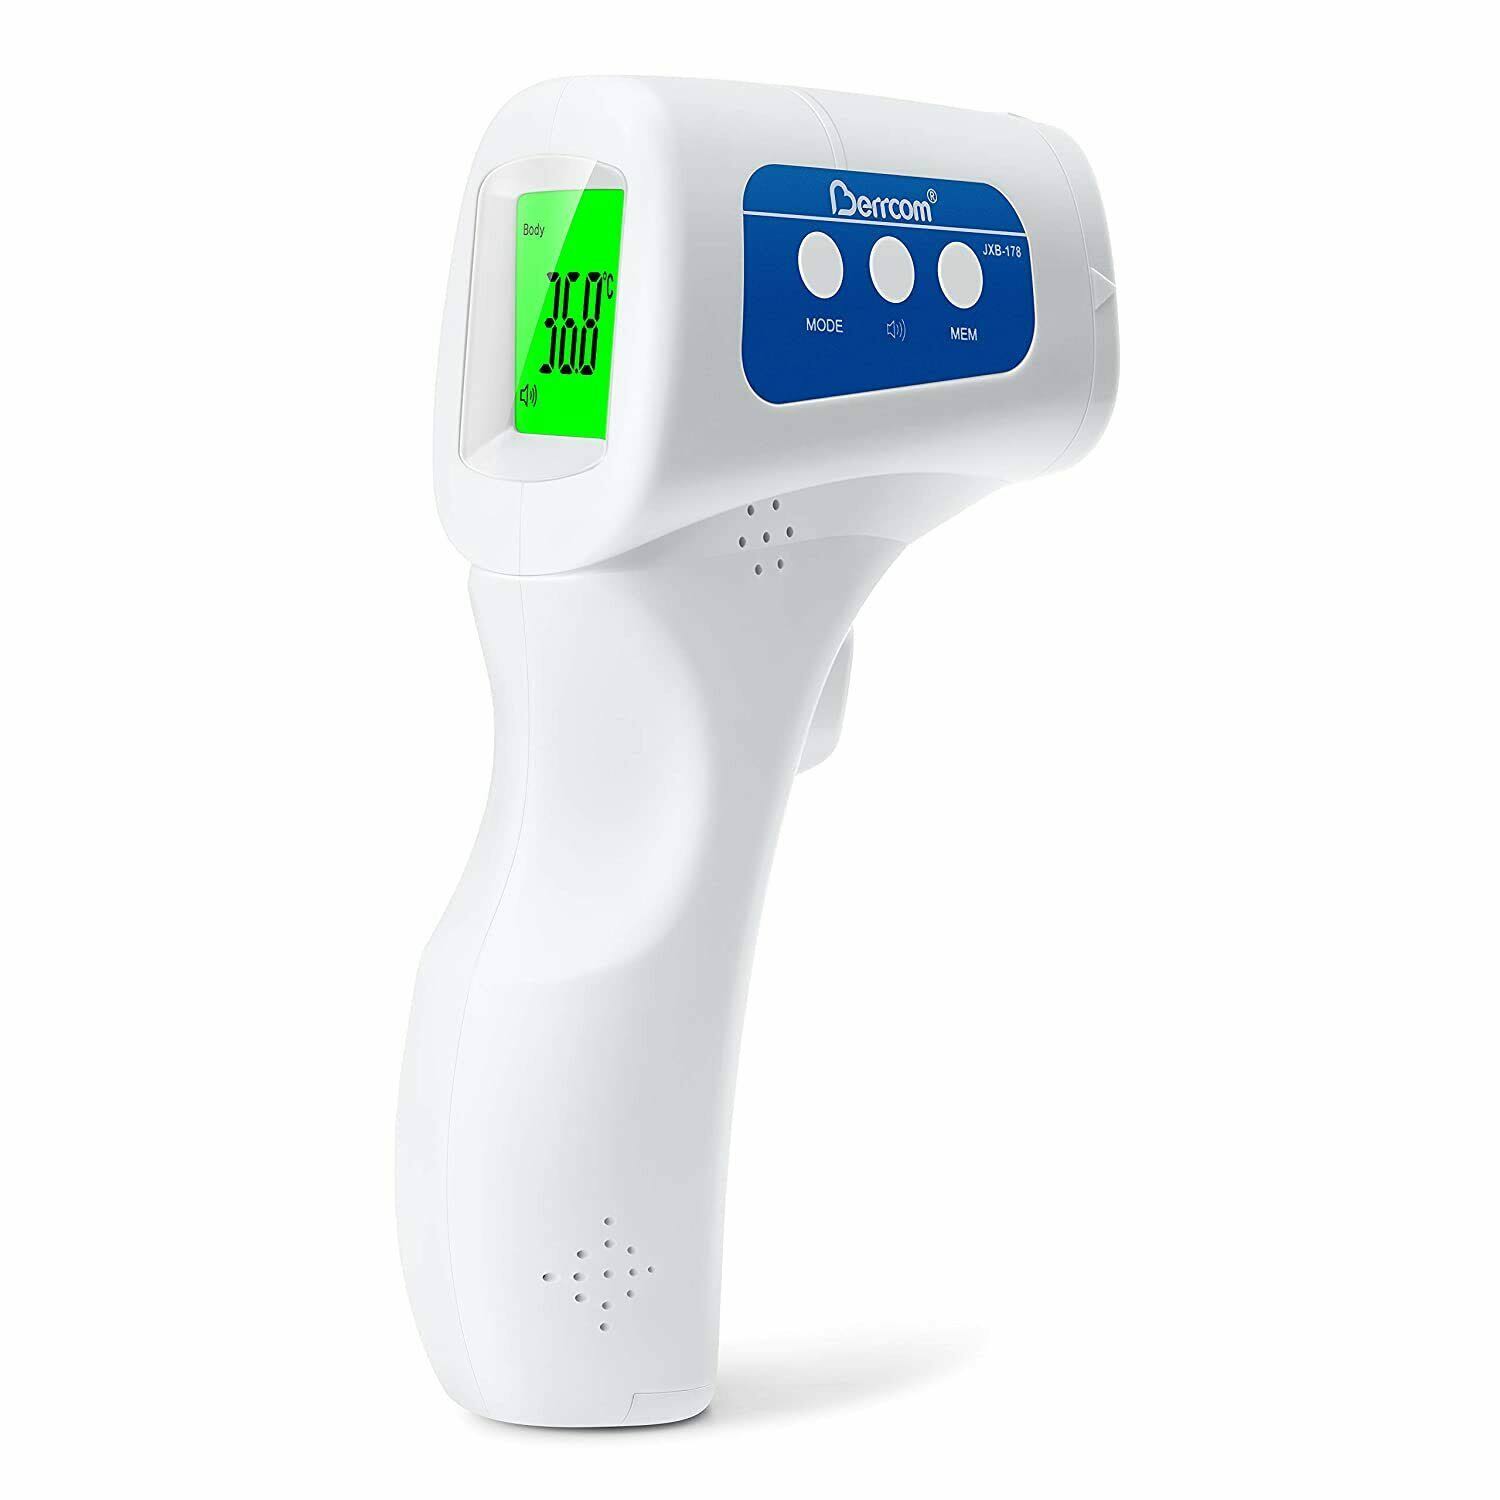 Berrcom Non Contact Infrared Thermometer